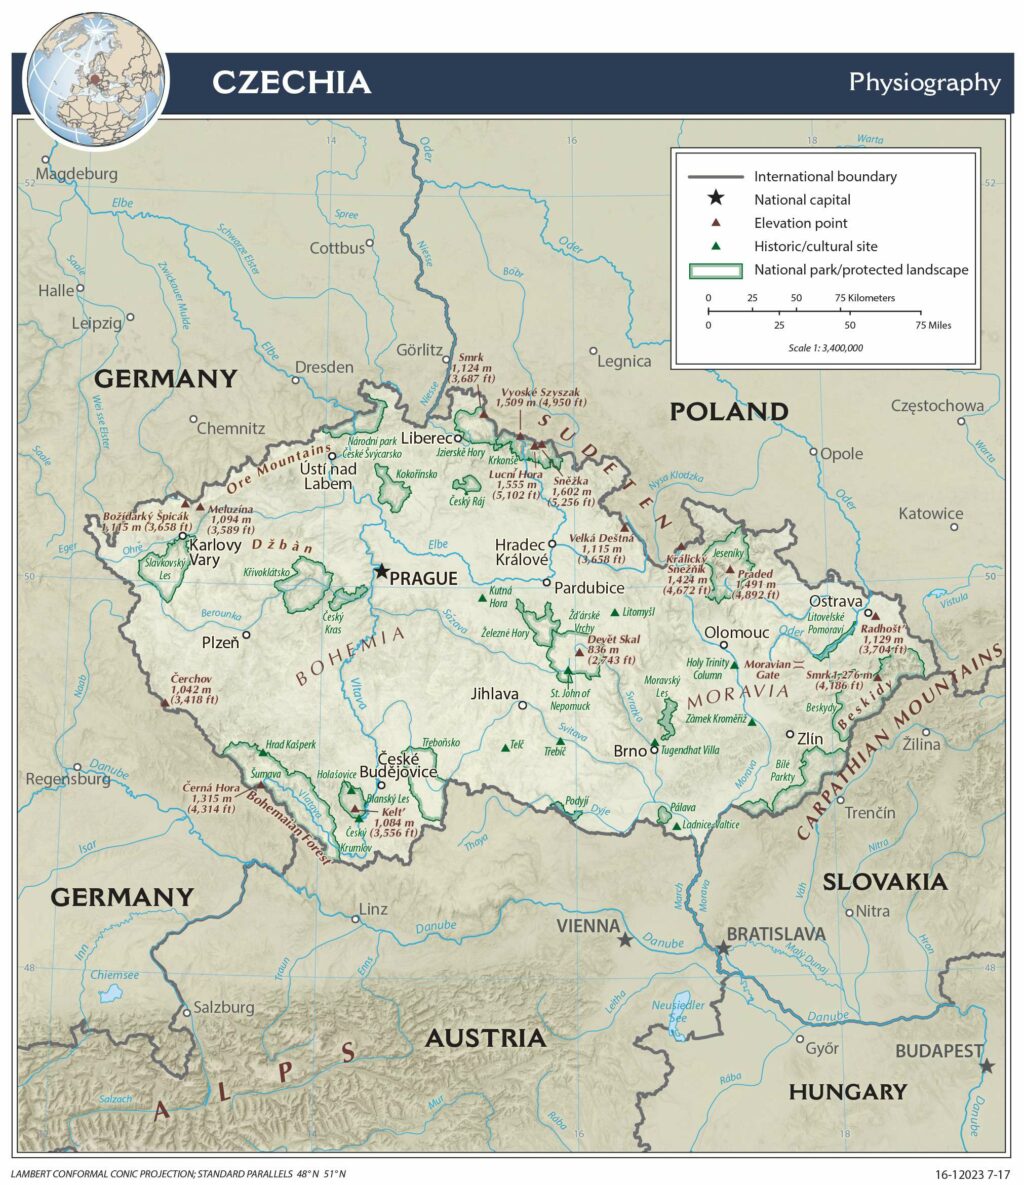 Czech Republic physiography map.